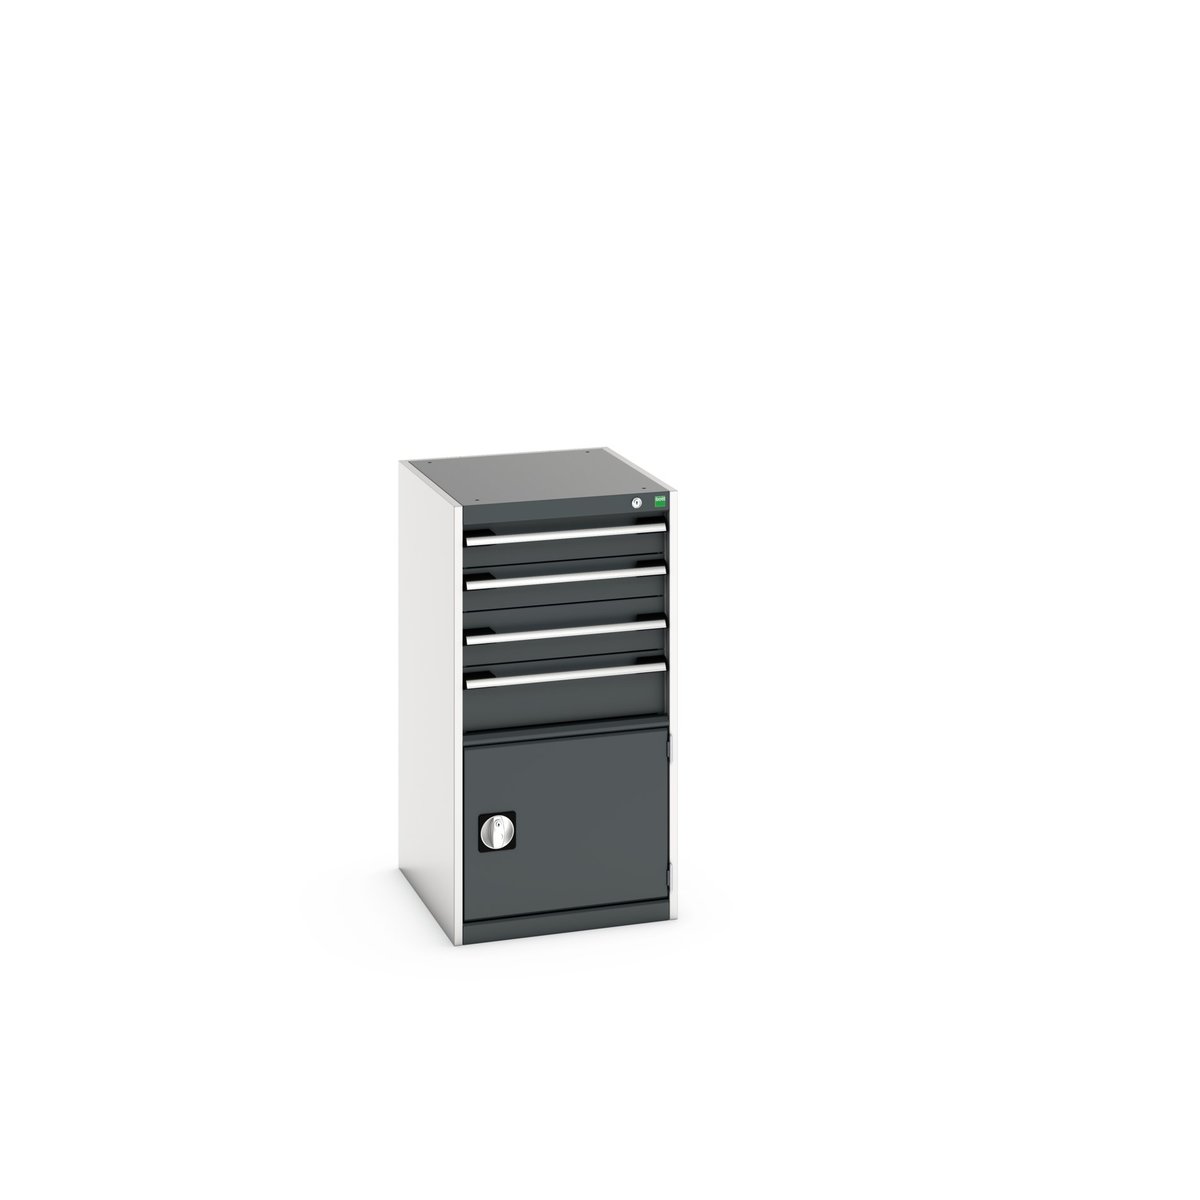 40018055. - cubio drawer cabinet